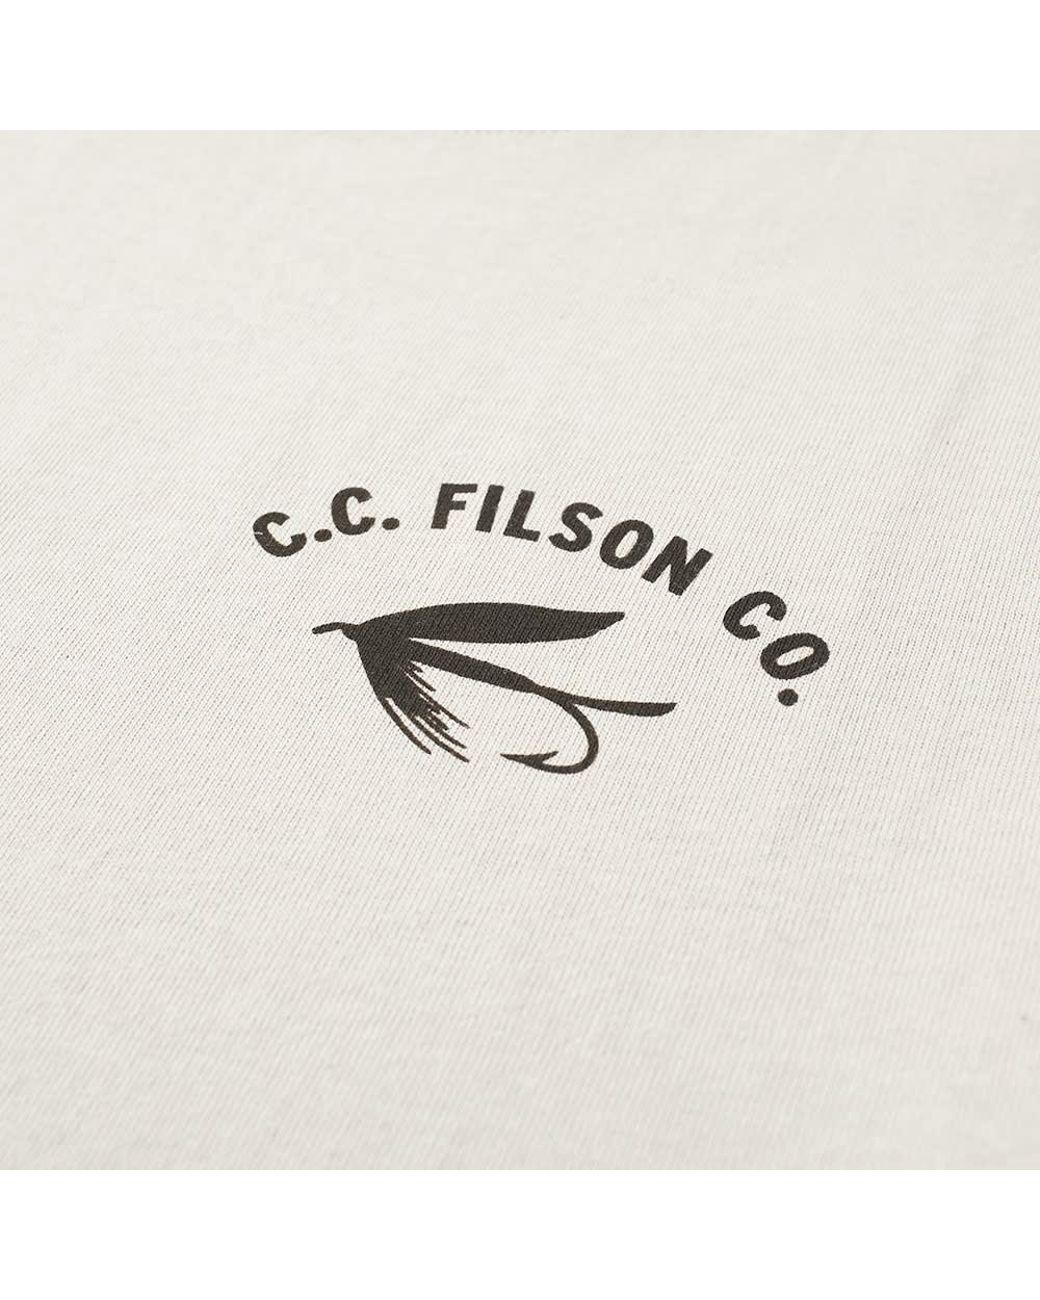 Filson Logo - Men's Gray Outfit Graphic Logo Tee